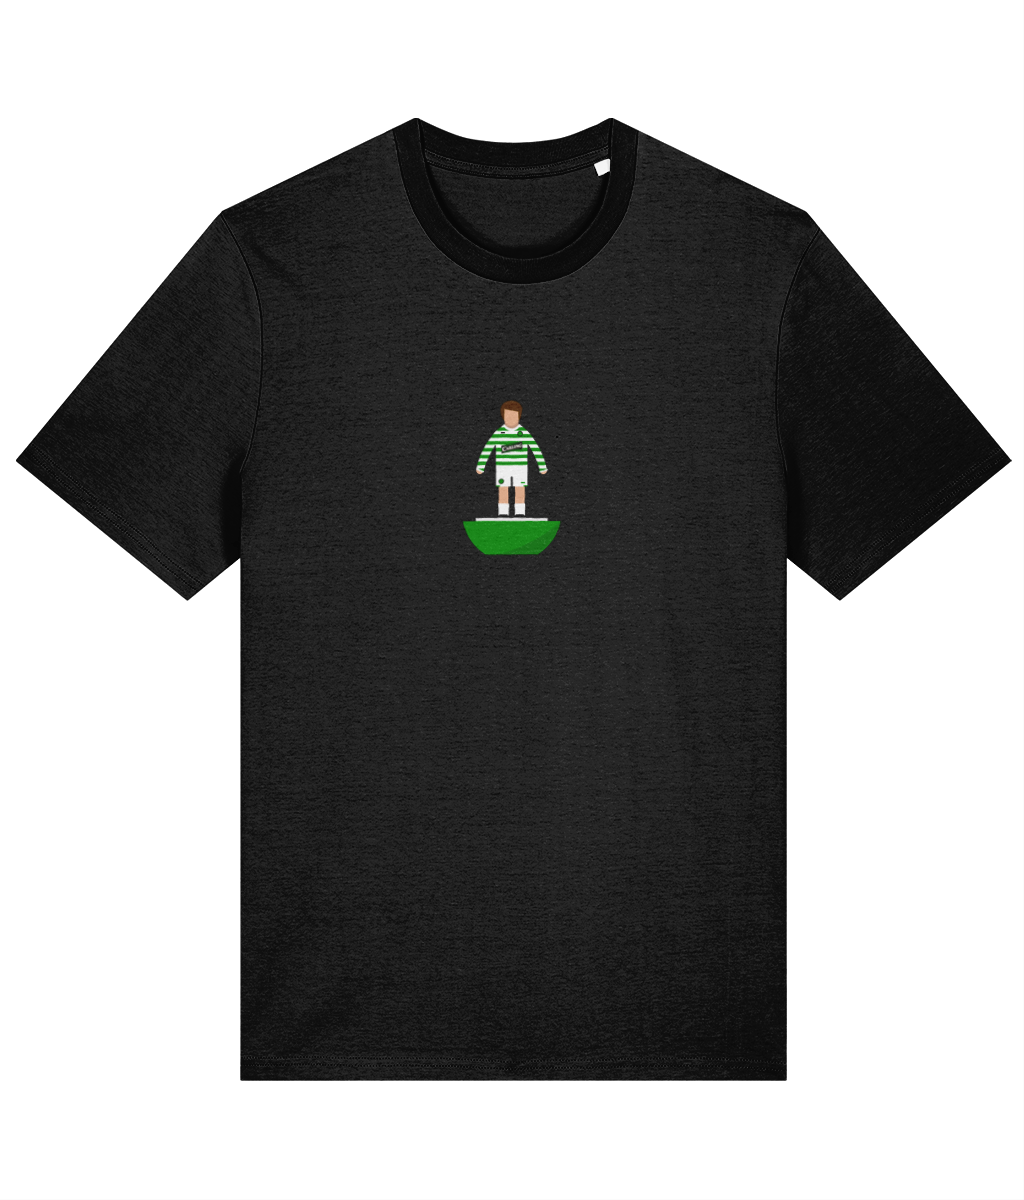 Football Kits 'Celtic 2007' Unisex T-Shirt